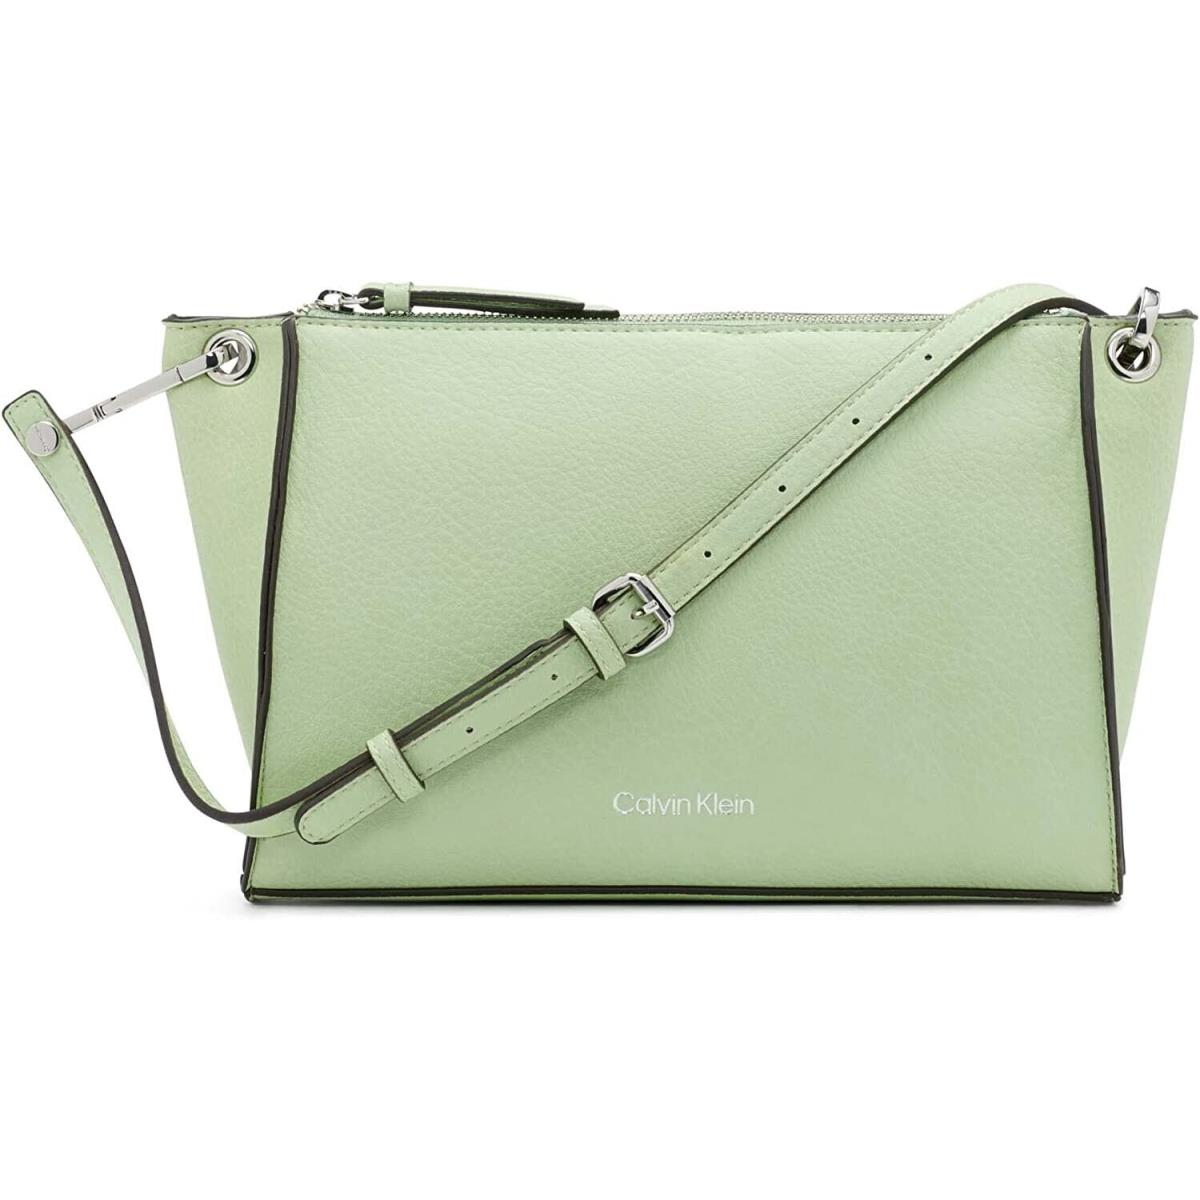 Calvin Klein Reyna Crossbody Pebble Leather Cucumber Green Zip Shoulder-bag